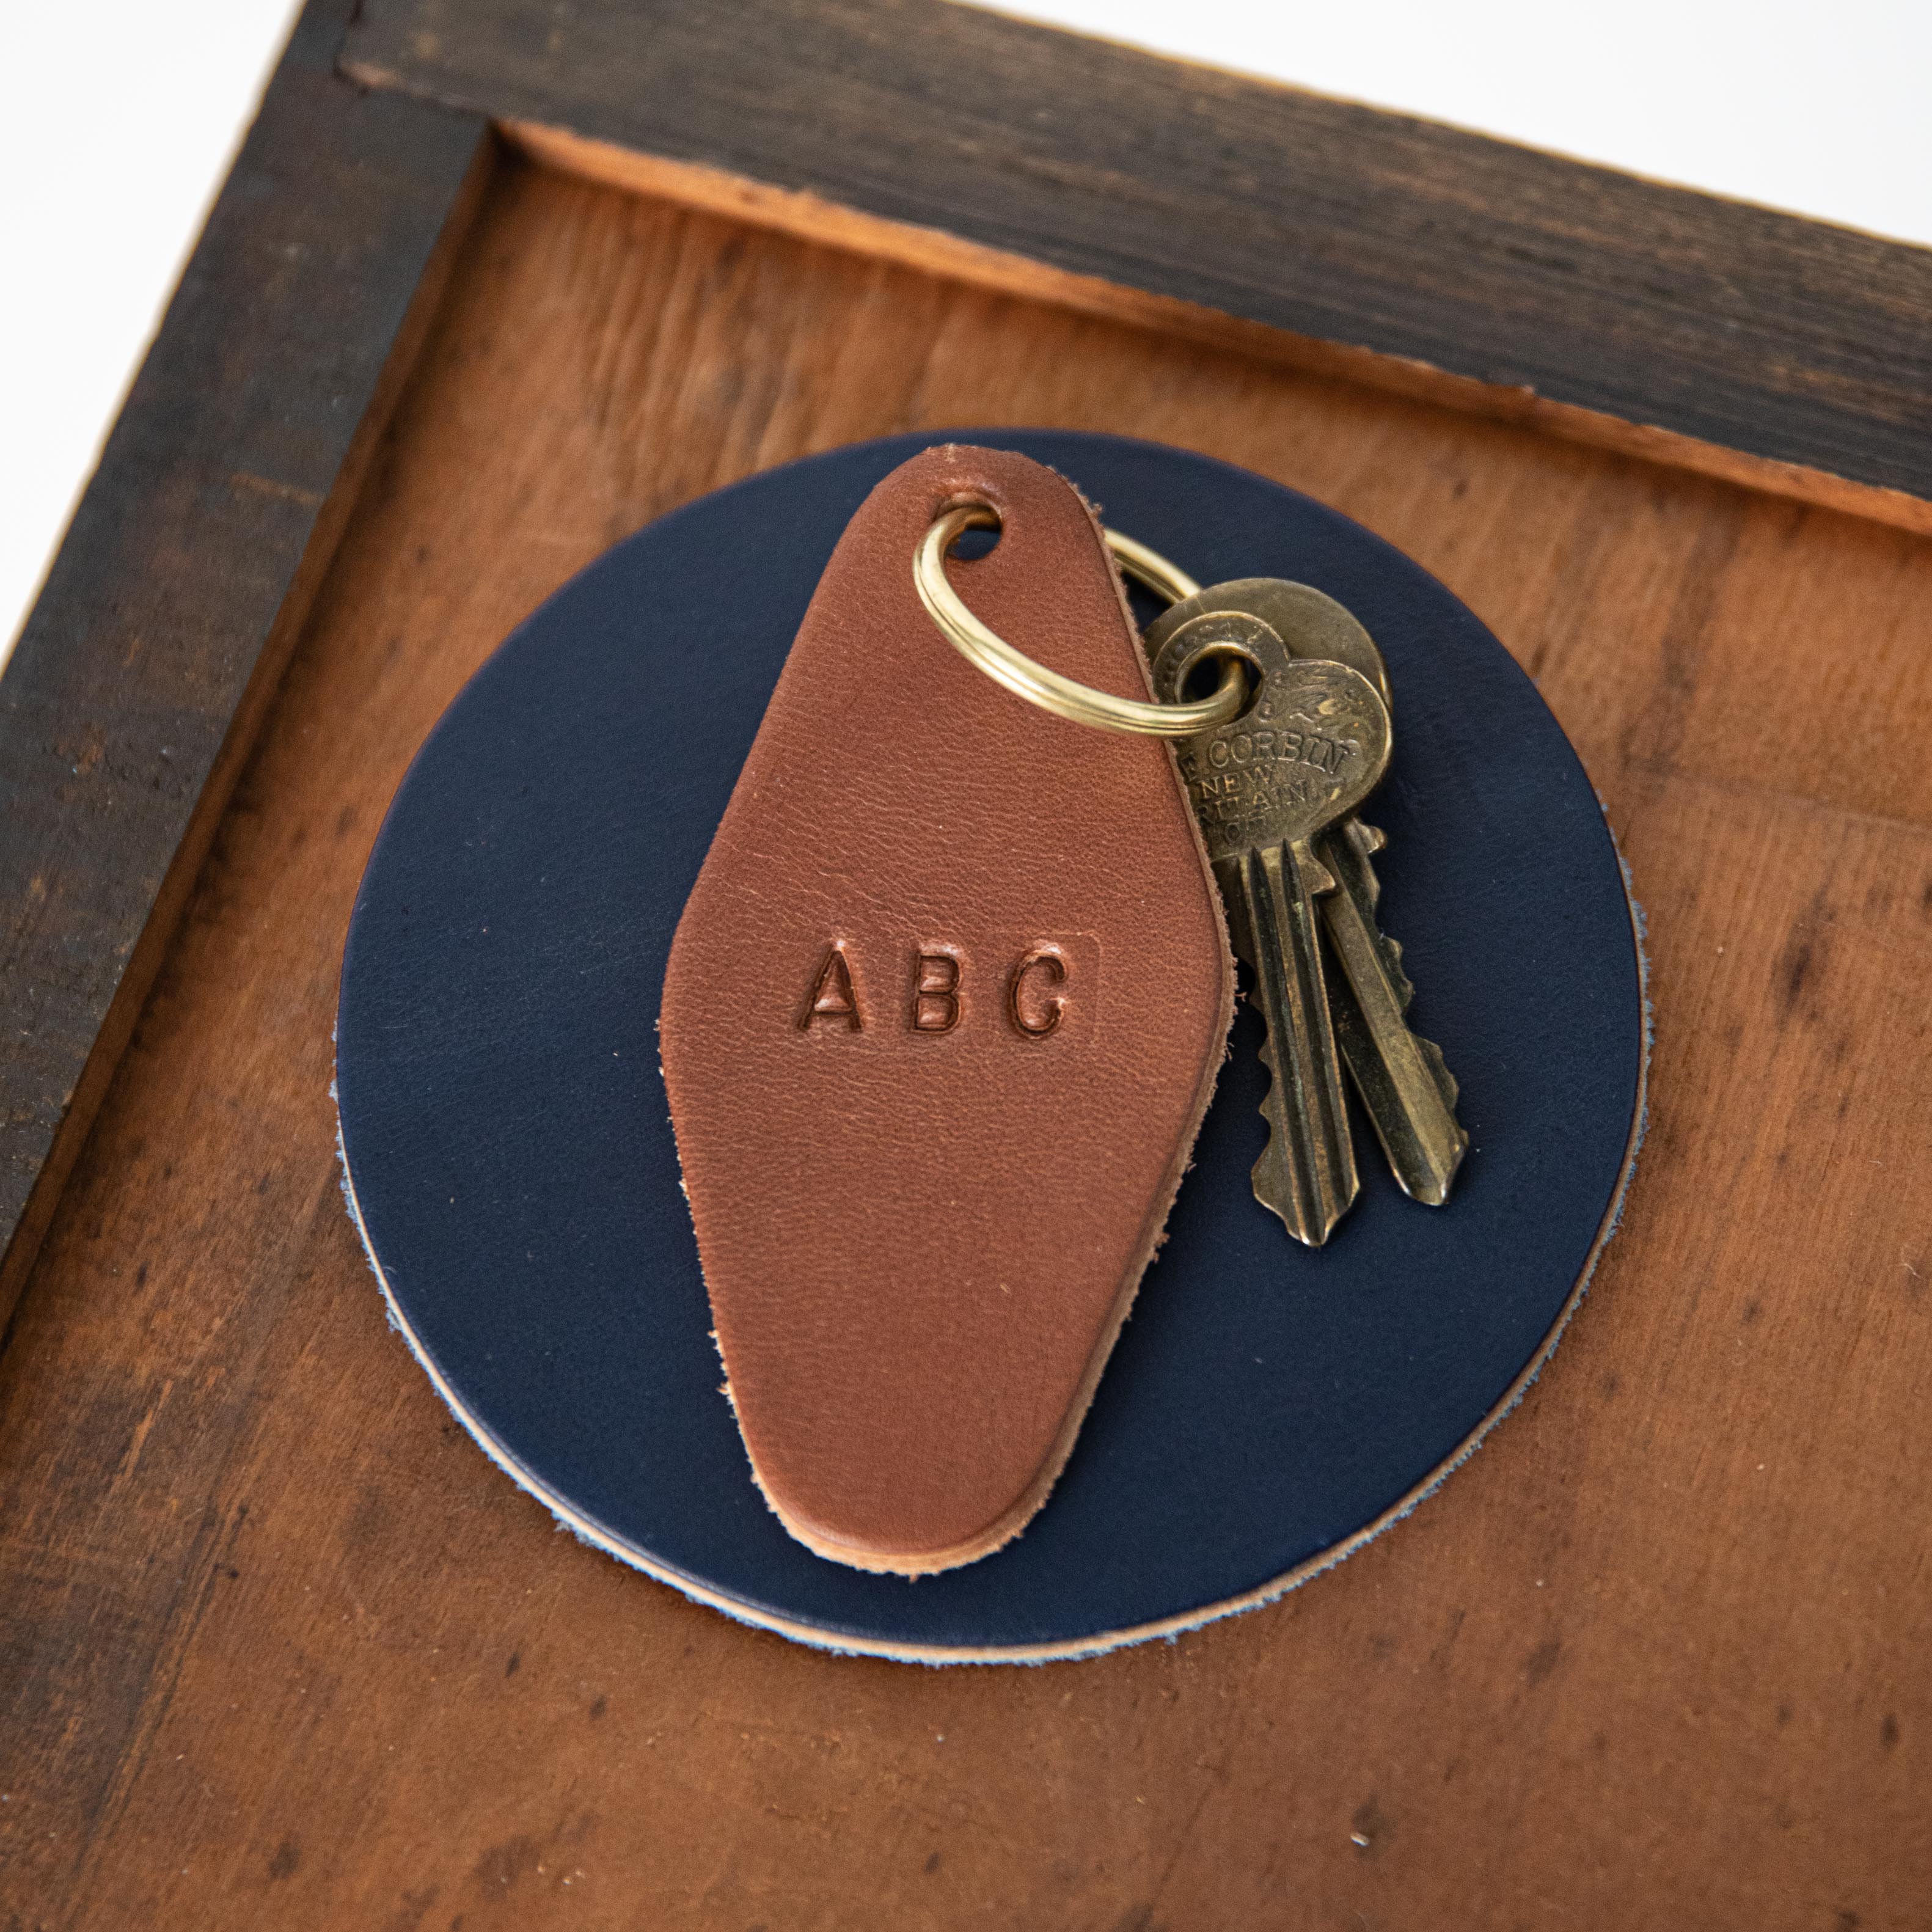 Purple Hotel Key Fob- leather keychain - leather key holder - leather key fob - KMM &amp; Co.